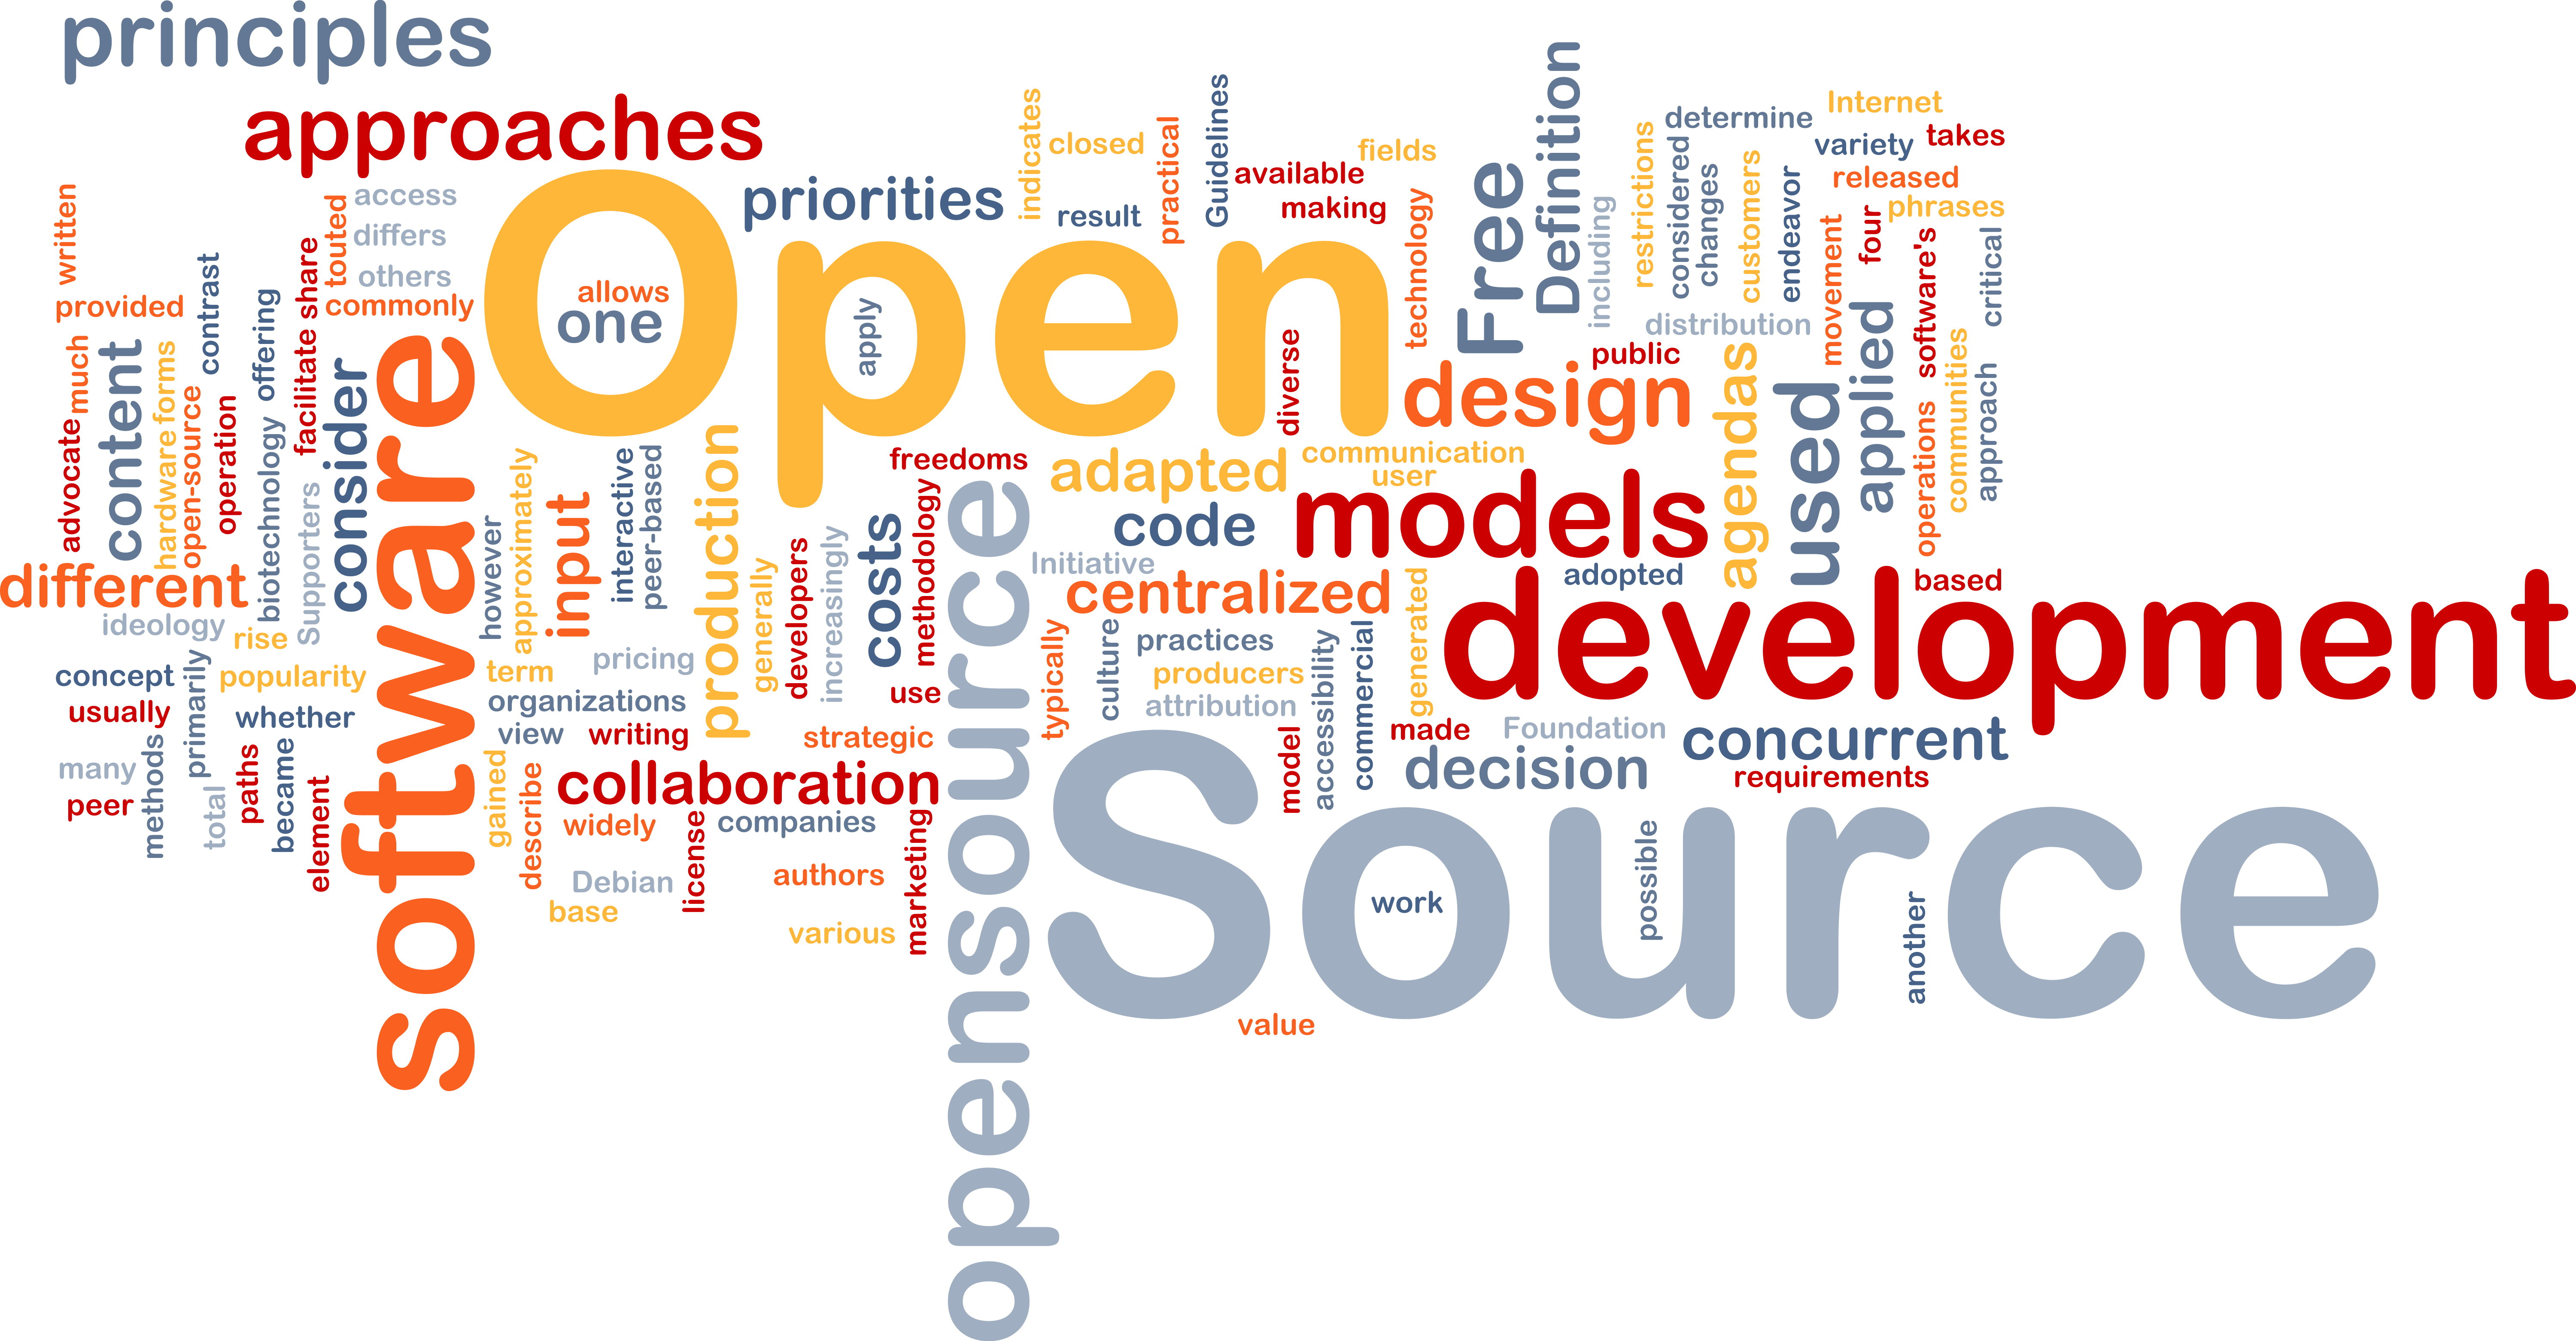 Take access. Source разработка. Развитие open source. Open source без фона.